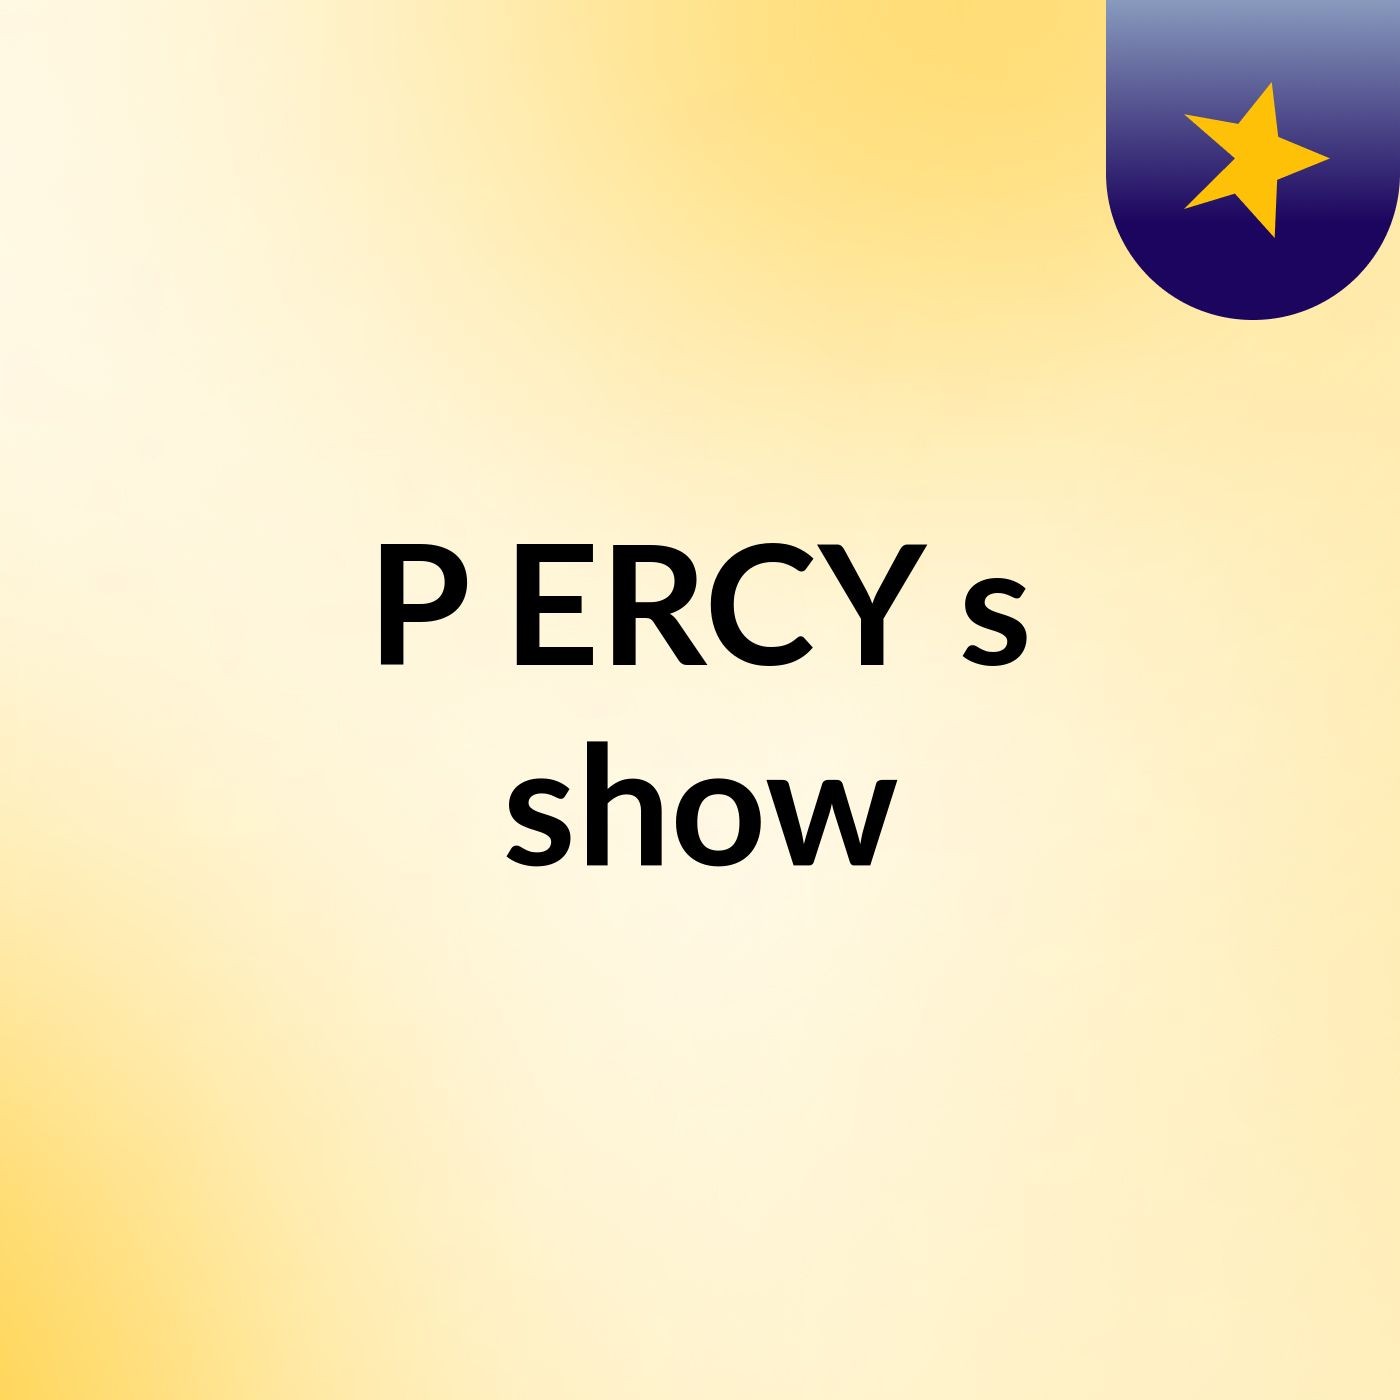 P ERCY's show